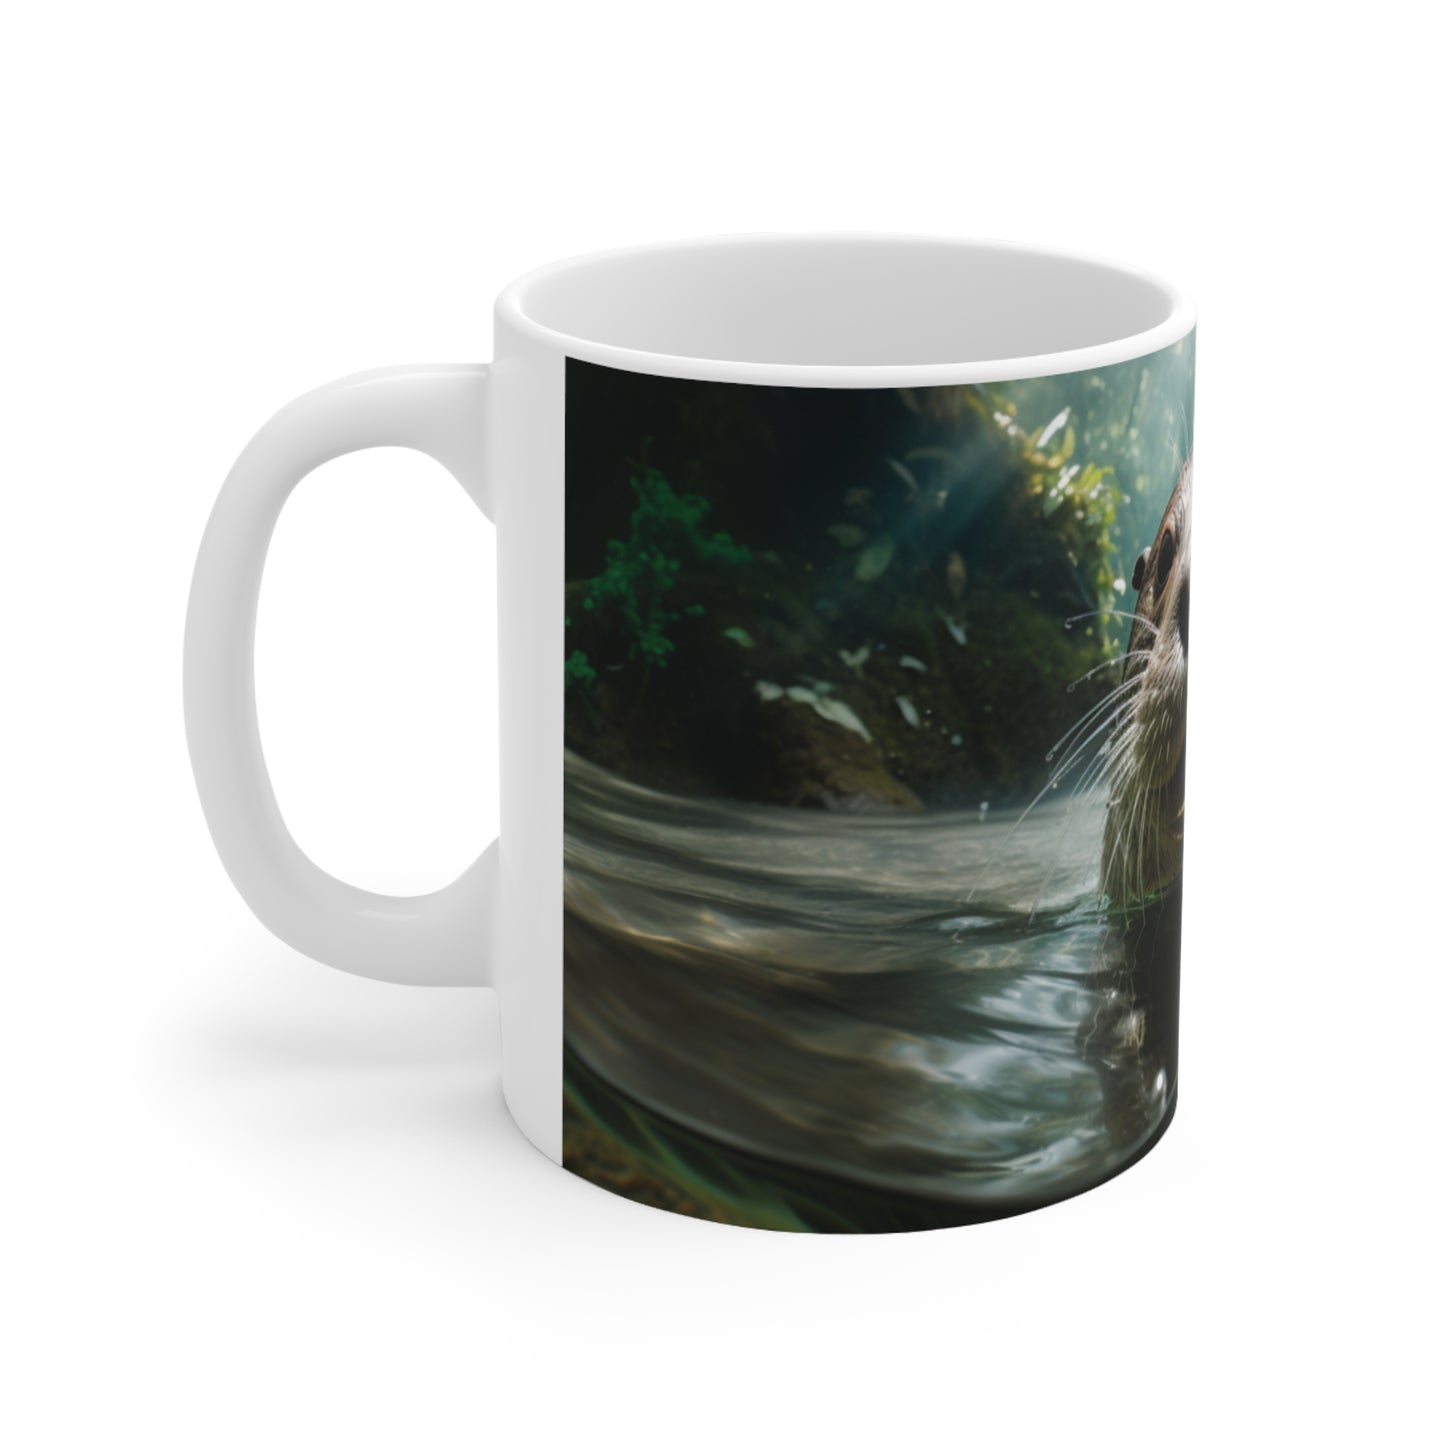 Giant River Otter | Ceramic Mug 11oz | Chrome